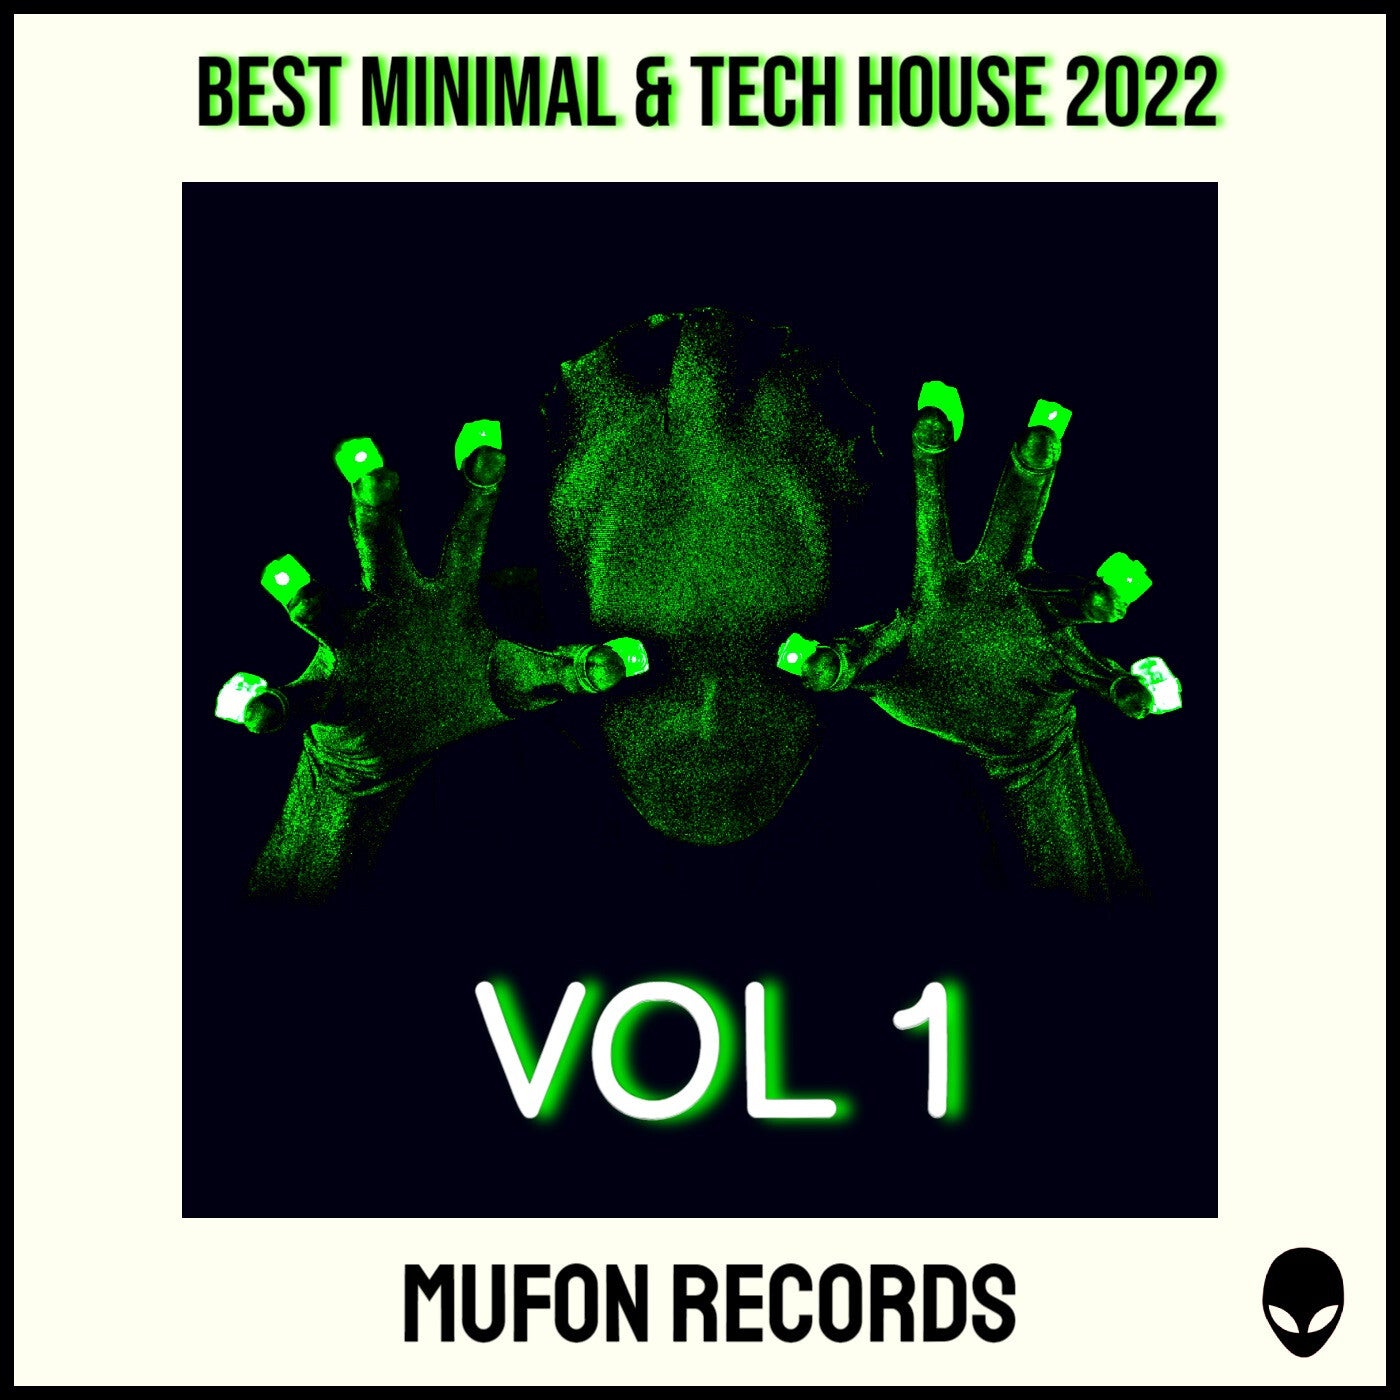 Best Minimal & Tech House 2022 Vol 1 from Mufon Records on Beatport